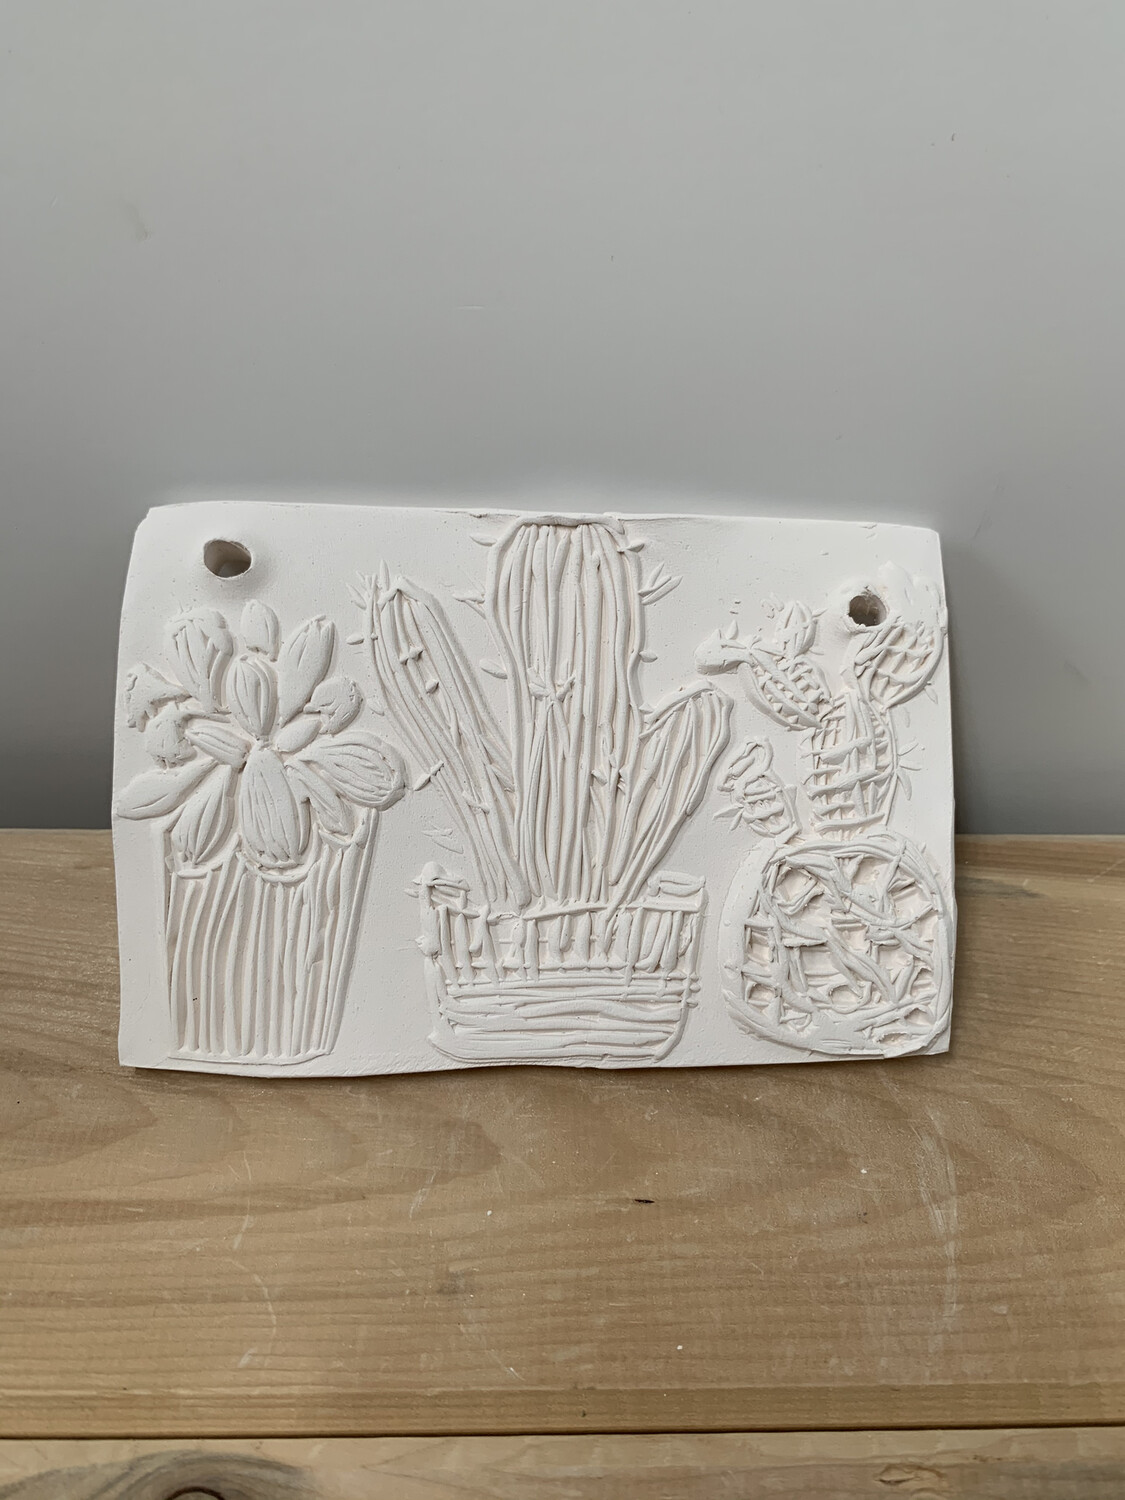 Paint Your Own Pottery - Ceramic
Cactus Succulent Tile Painting Kit